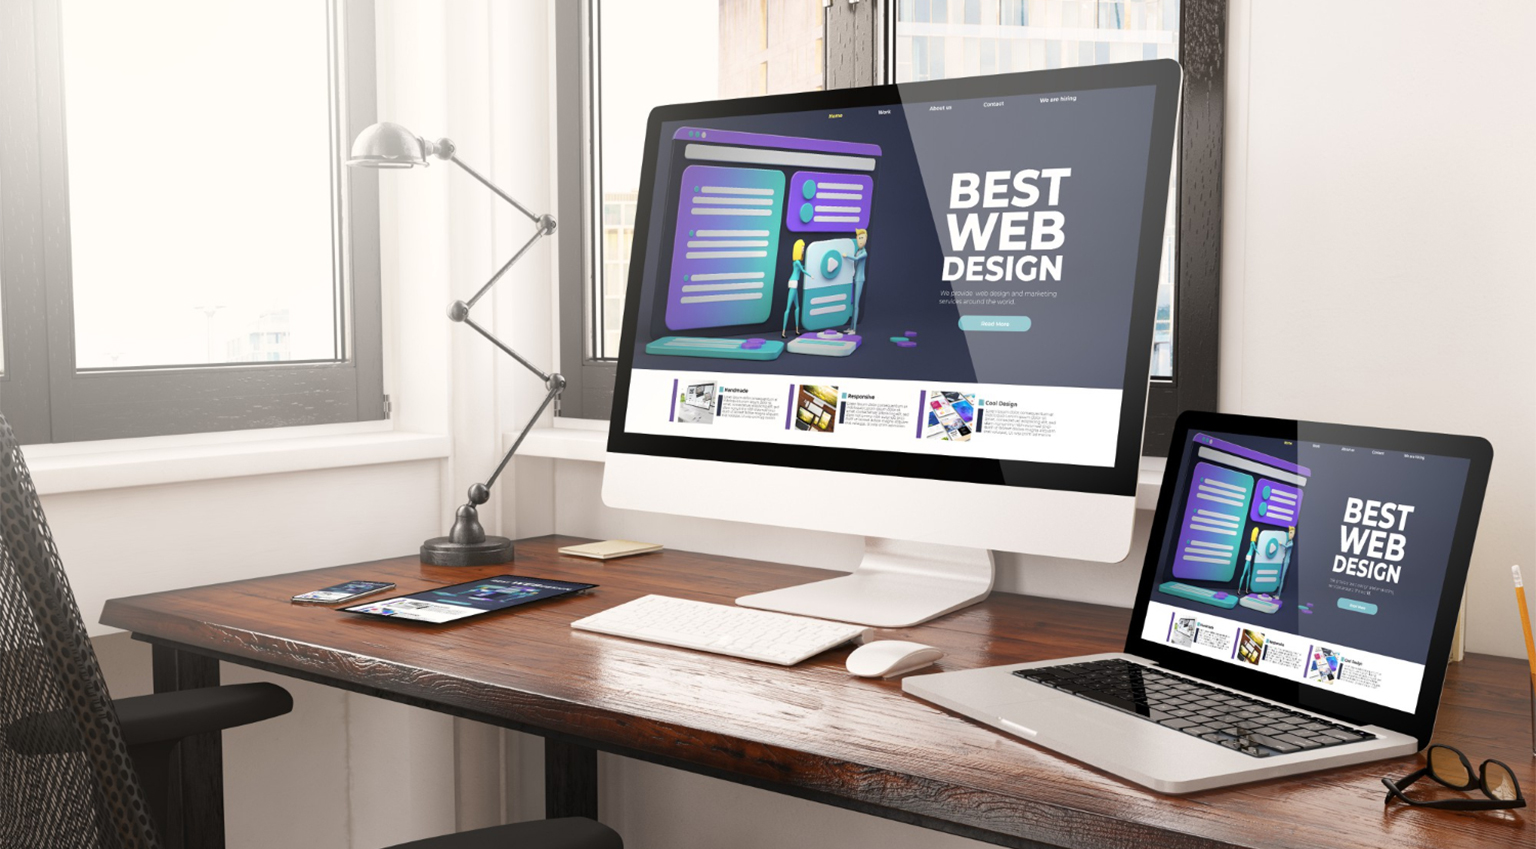 Website Design Services